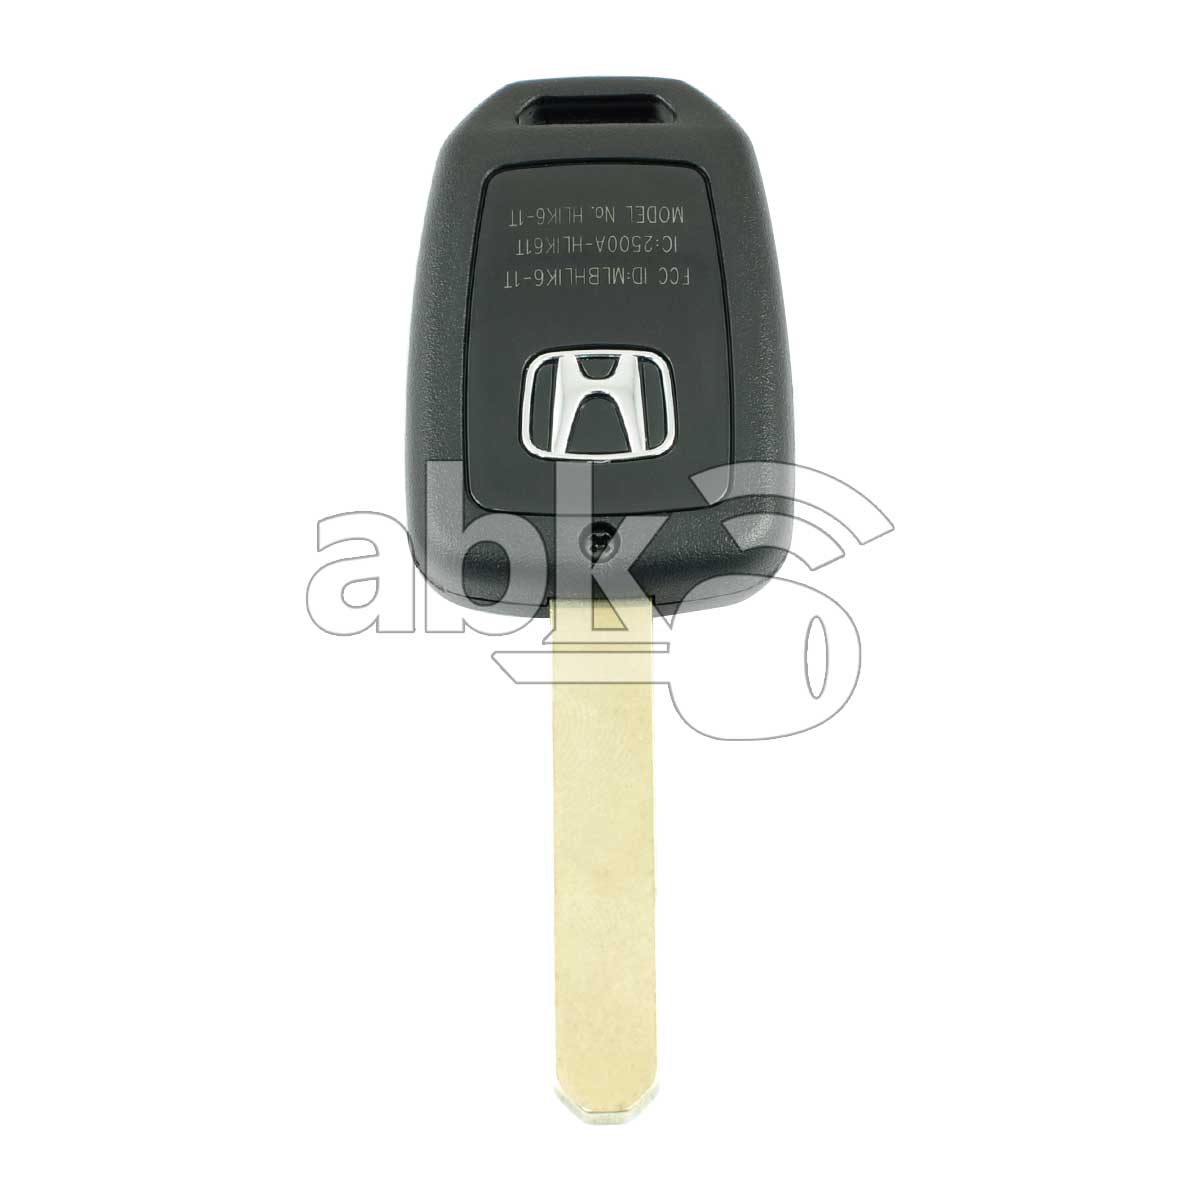 Honda Accord Civic CR-V HR-V 2012+ Key Head Remote Cover 4Buttons HON66 - ABK-4252 - ABKEYS.COM